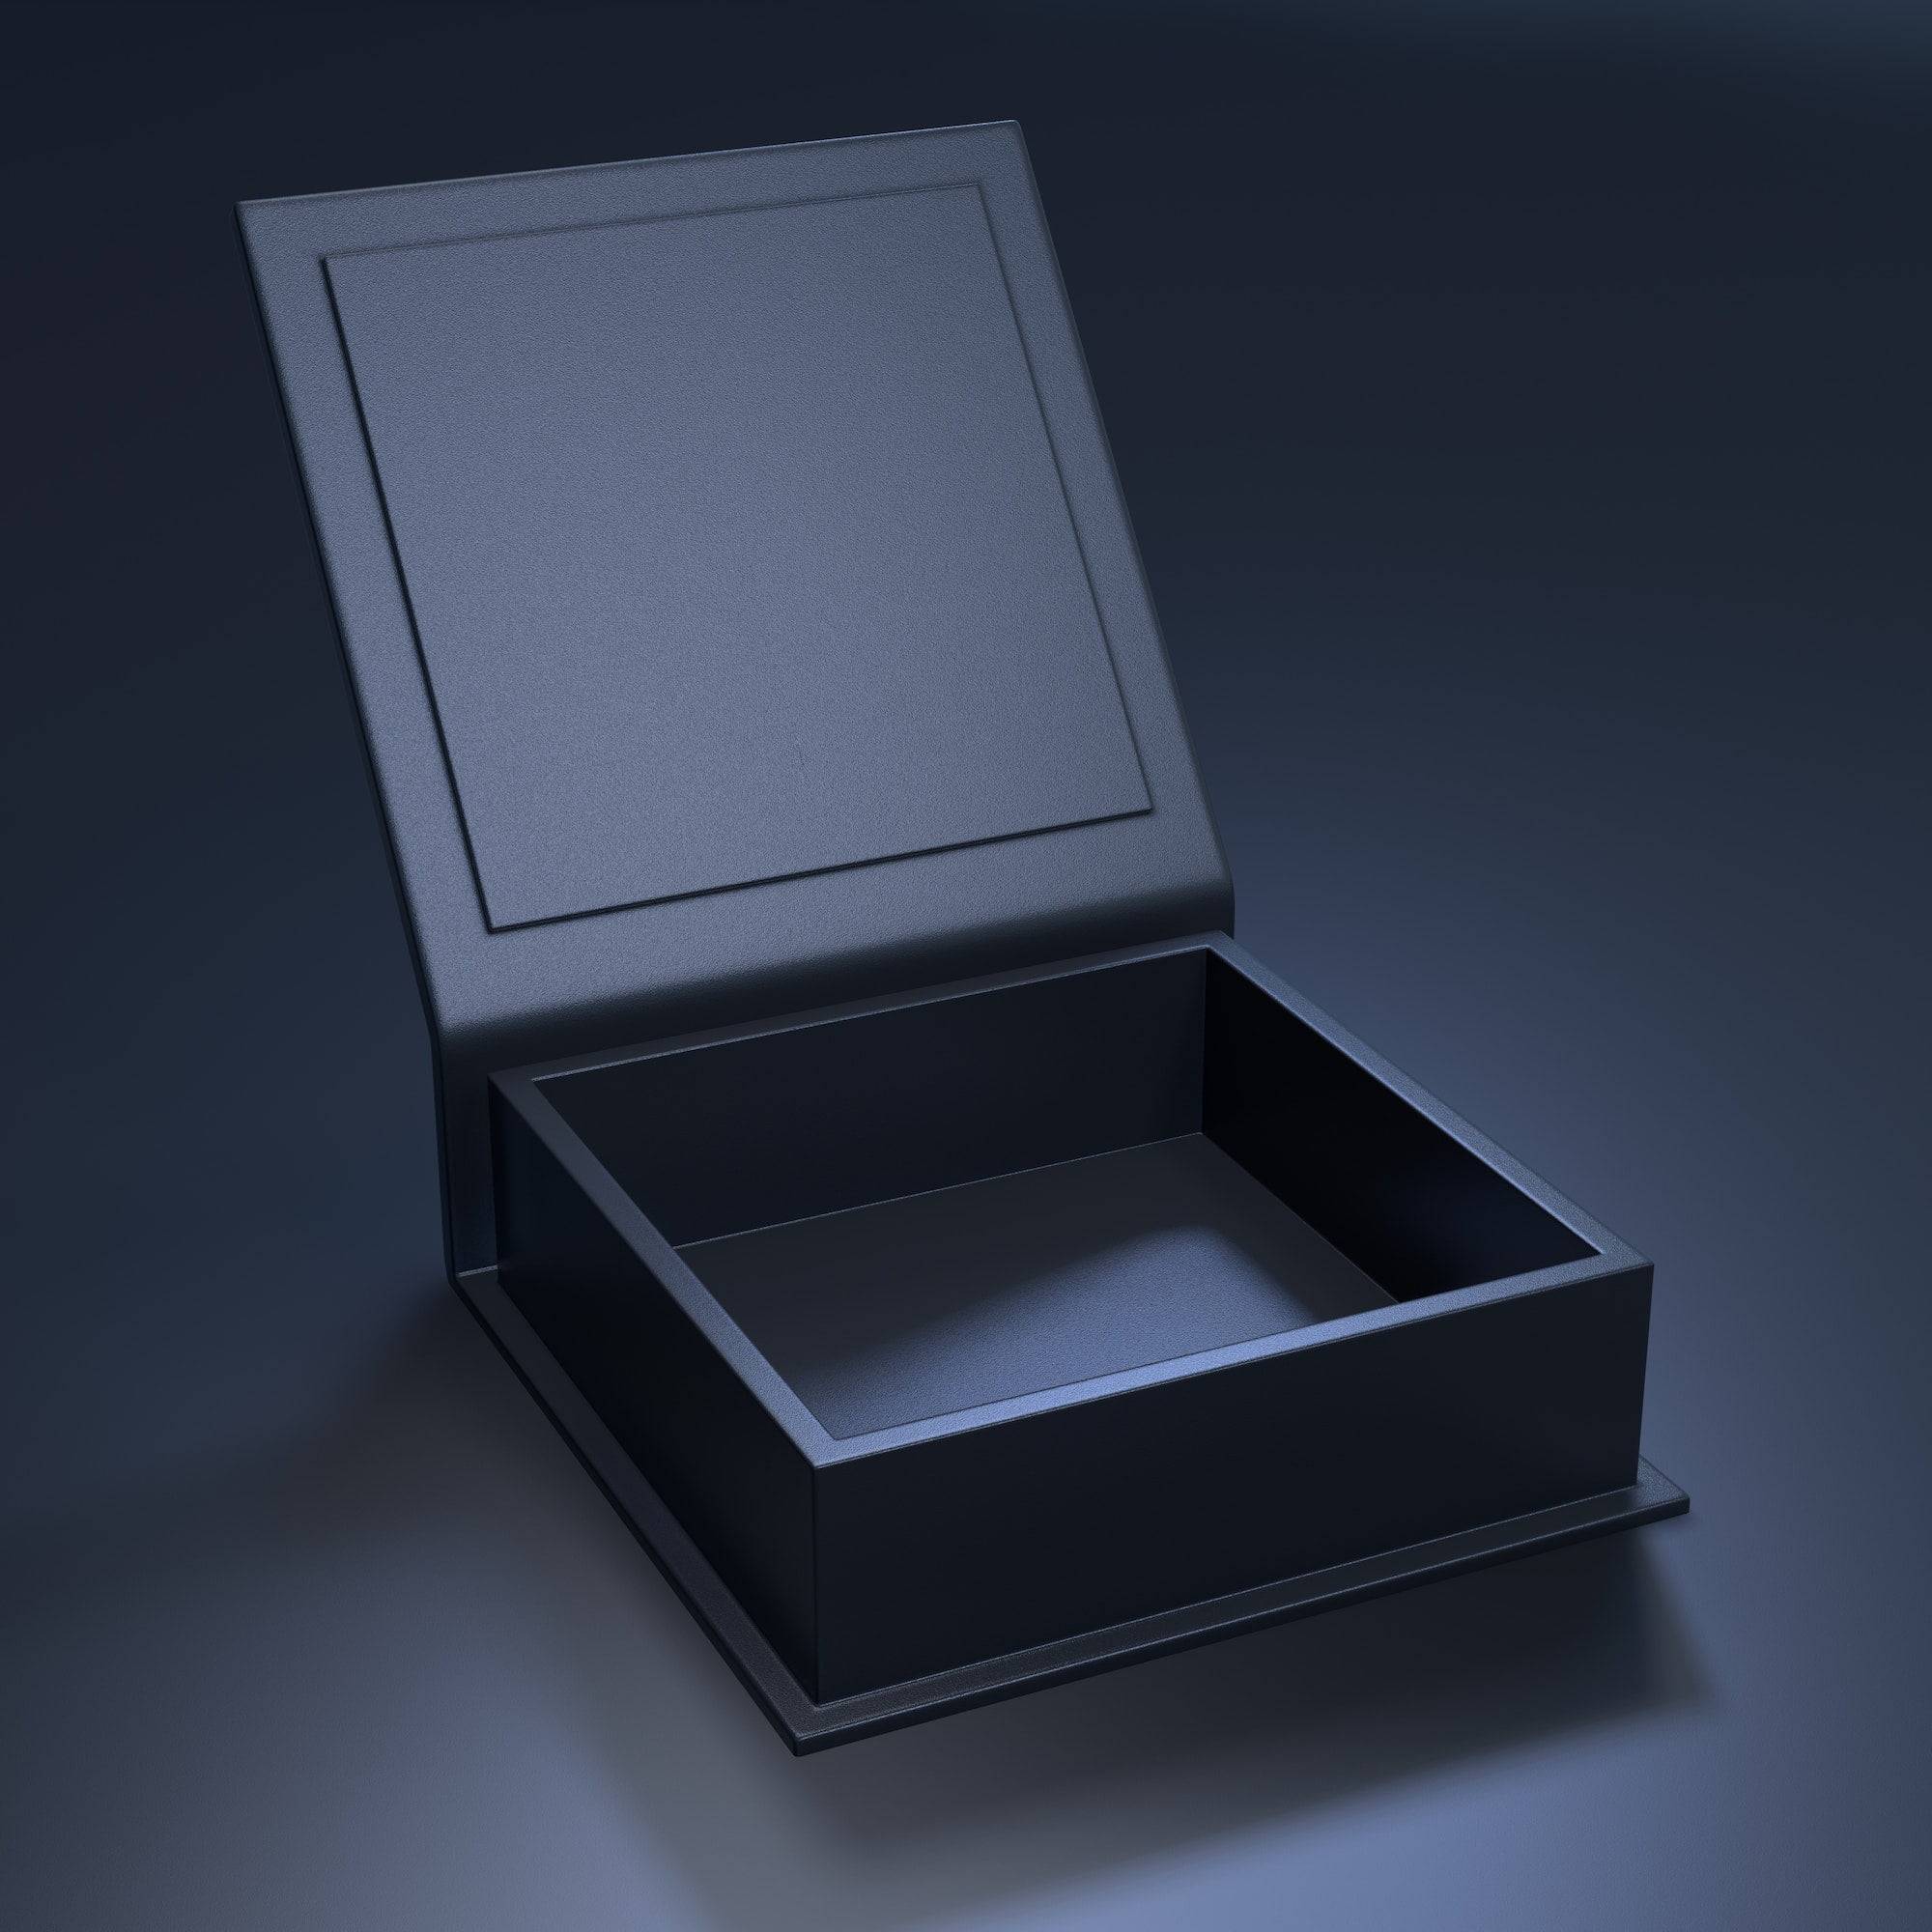 black-blank-open-cardboard-box-on-a-dark-background-mock-up-template-.jpg